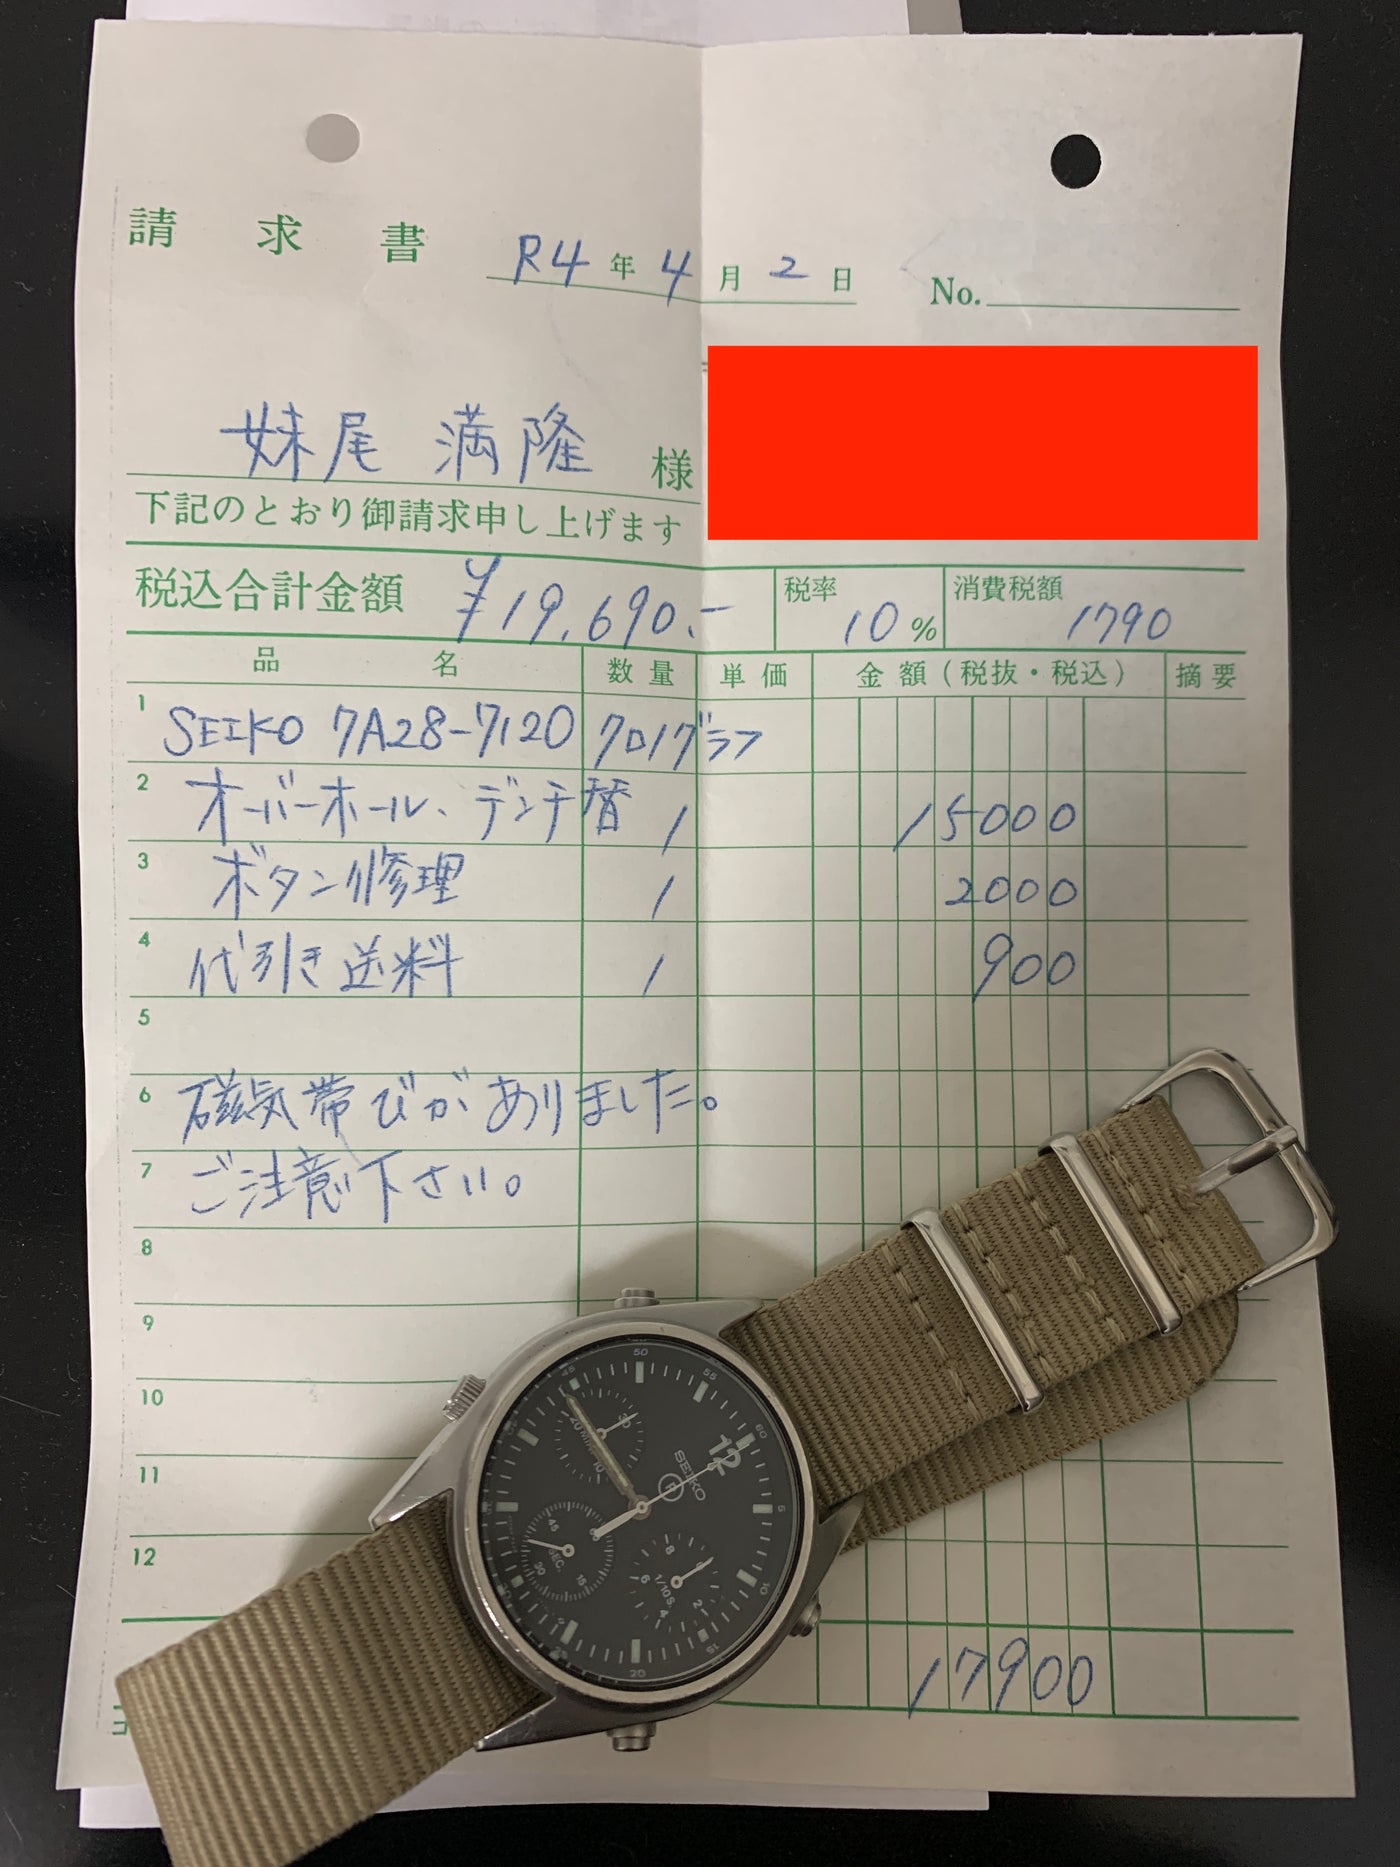 Overhauled SEIKO Royal Air Force Chronograph GEN1